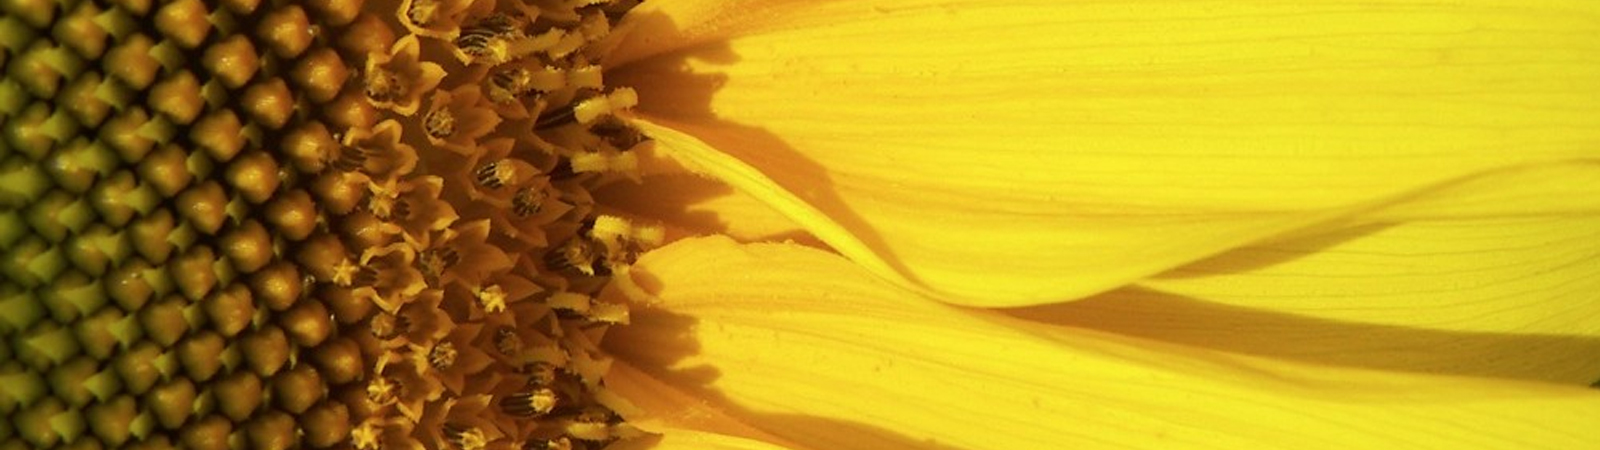 Services in Sunflower